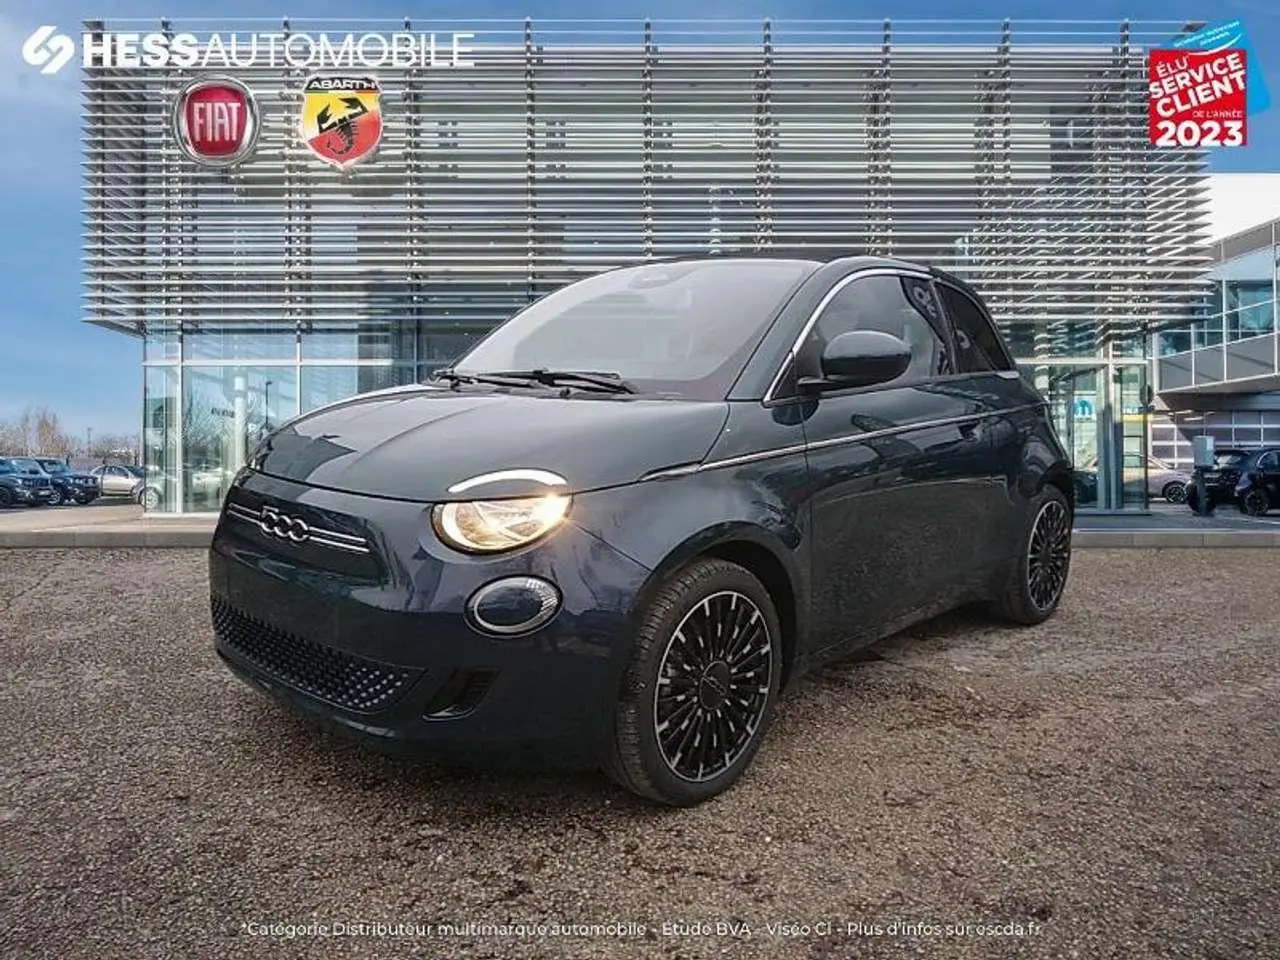 Photo 1 : Fiat 500c 2022 Electric